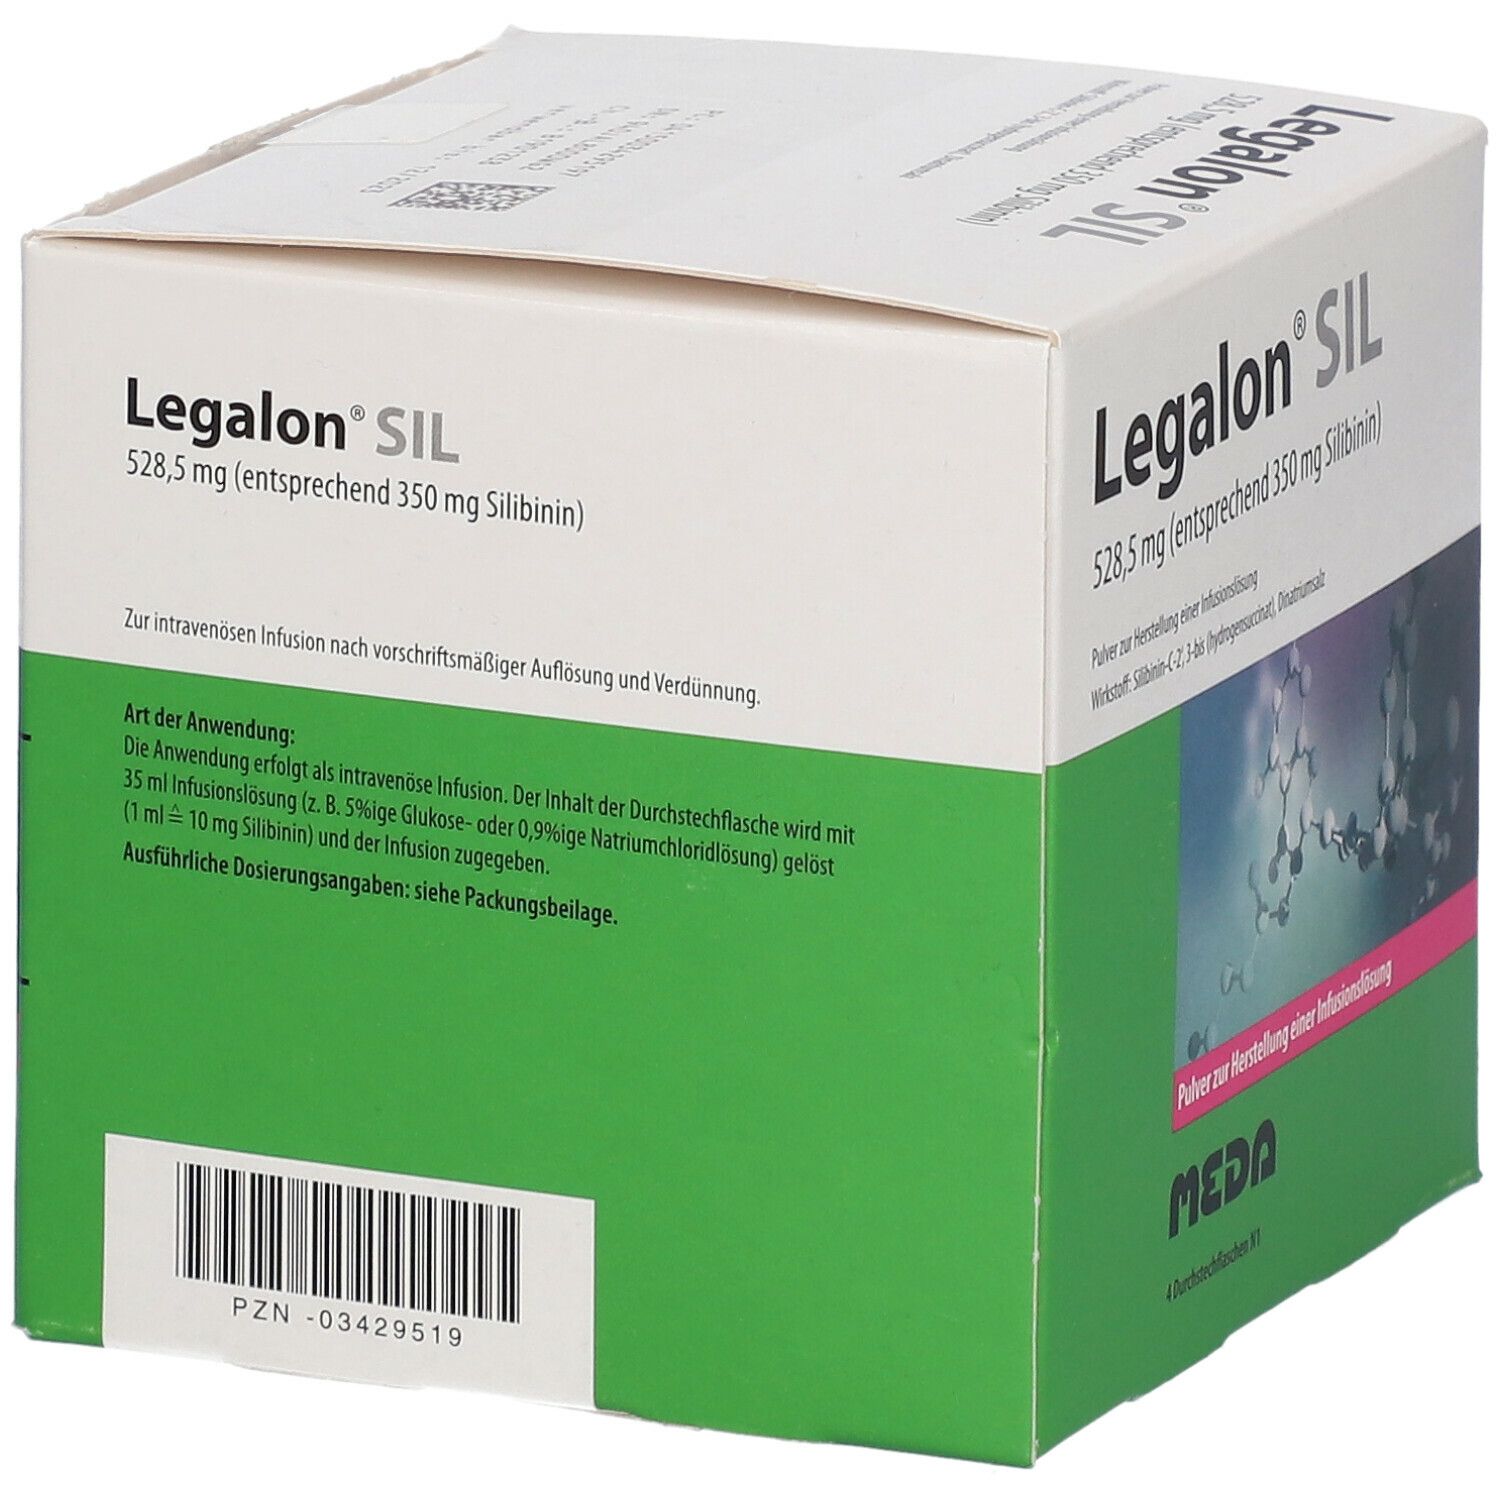 Legalon® SIL 528,5 mg